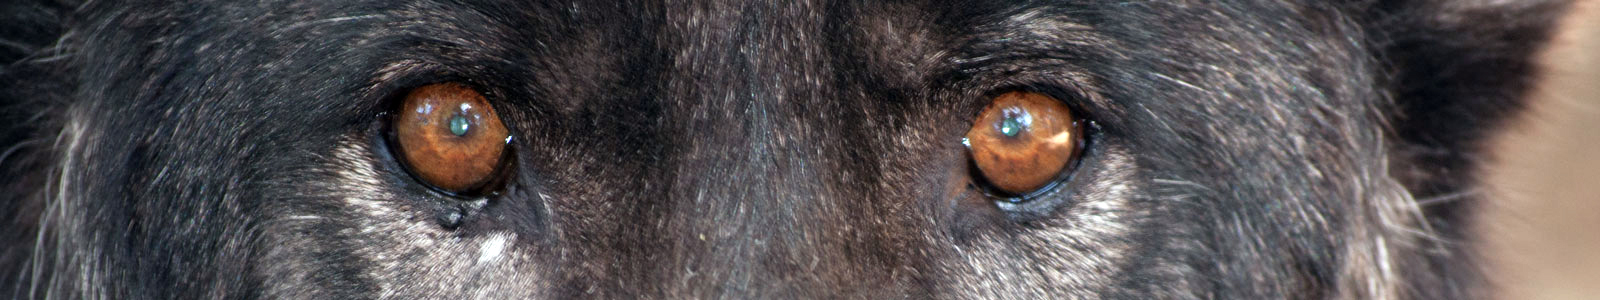 Texas Wolfdog Project Visit the Shelter Header Image